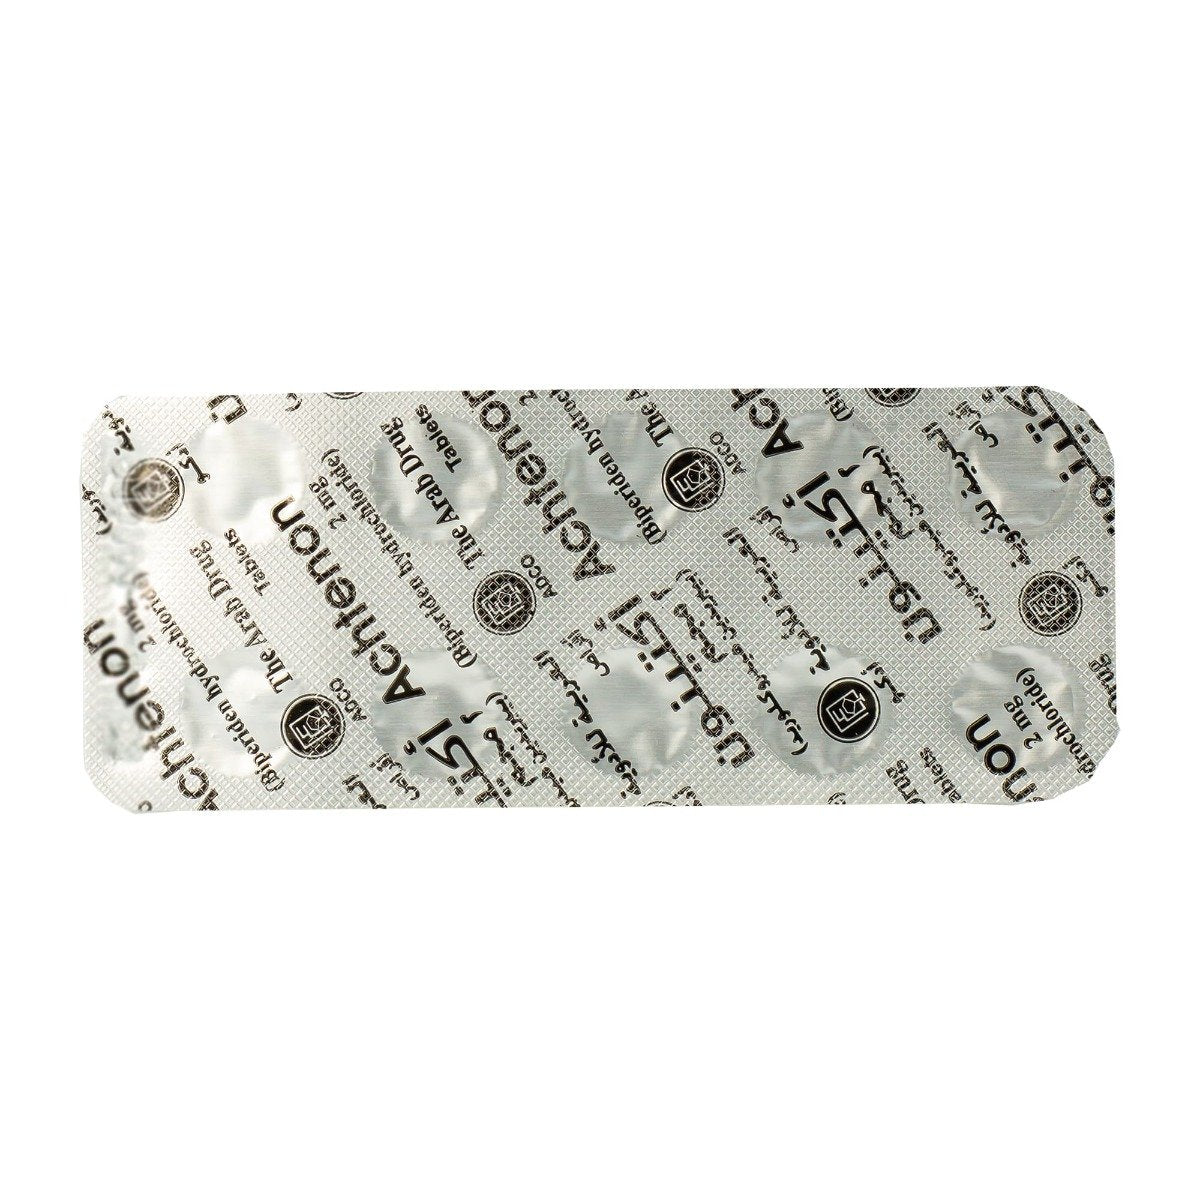 Achtenon 2 mg - 20 Tablets - Bloom Pharmacy